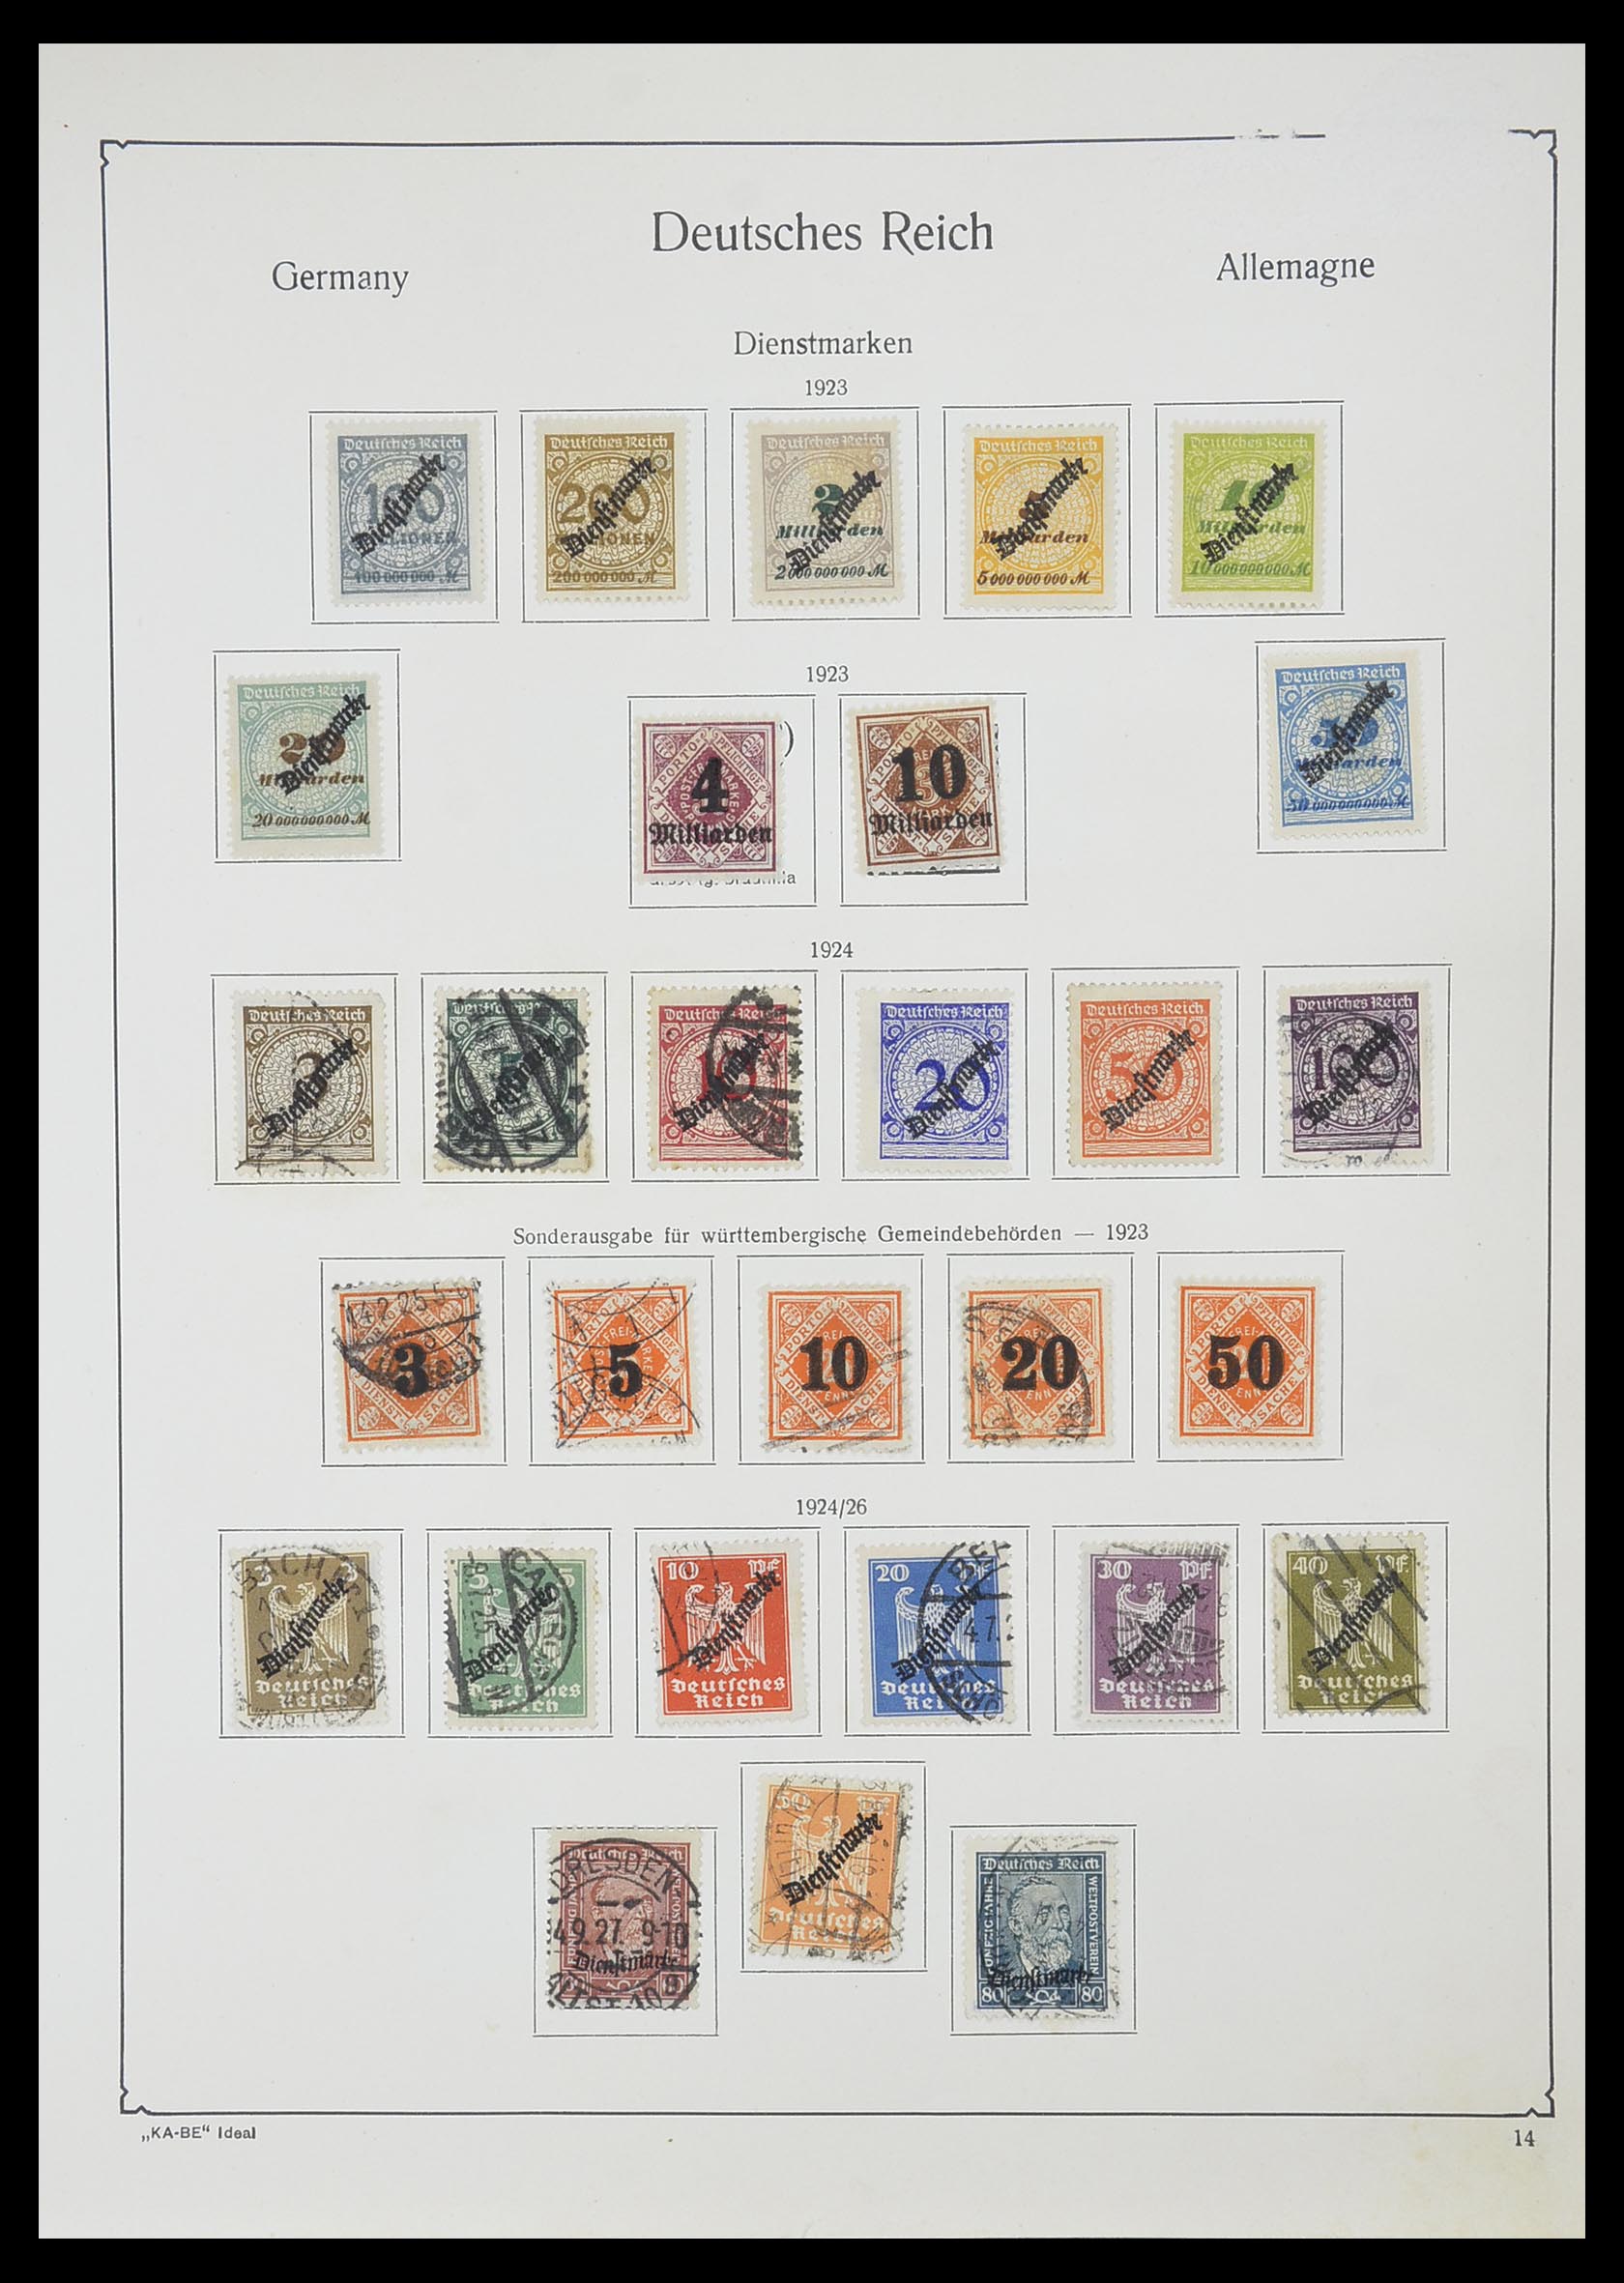 33359 019 - Stamp collection 33359 German Reich 1872-1945.